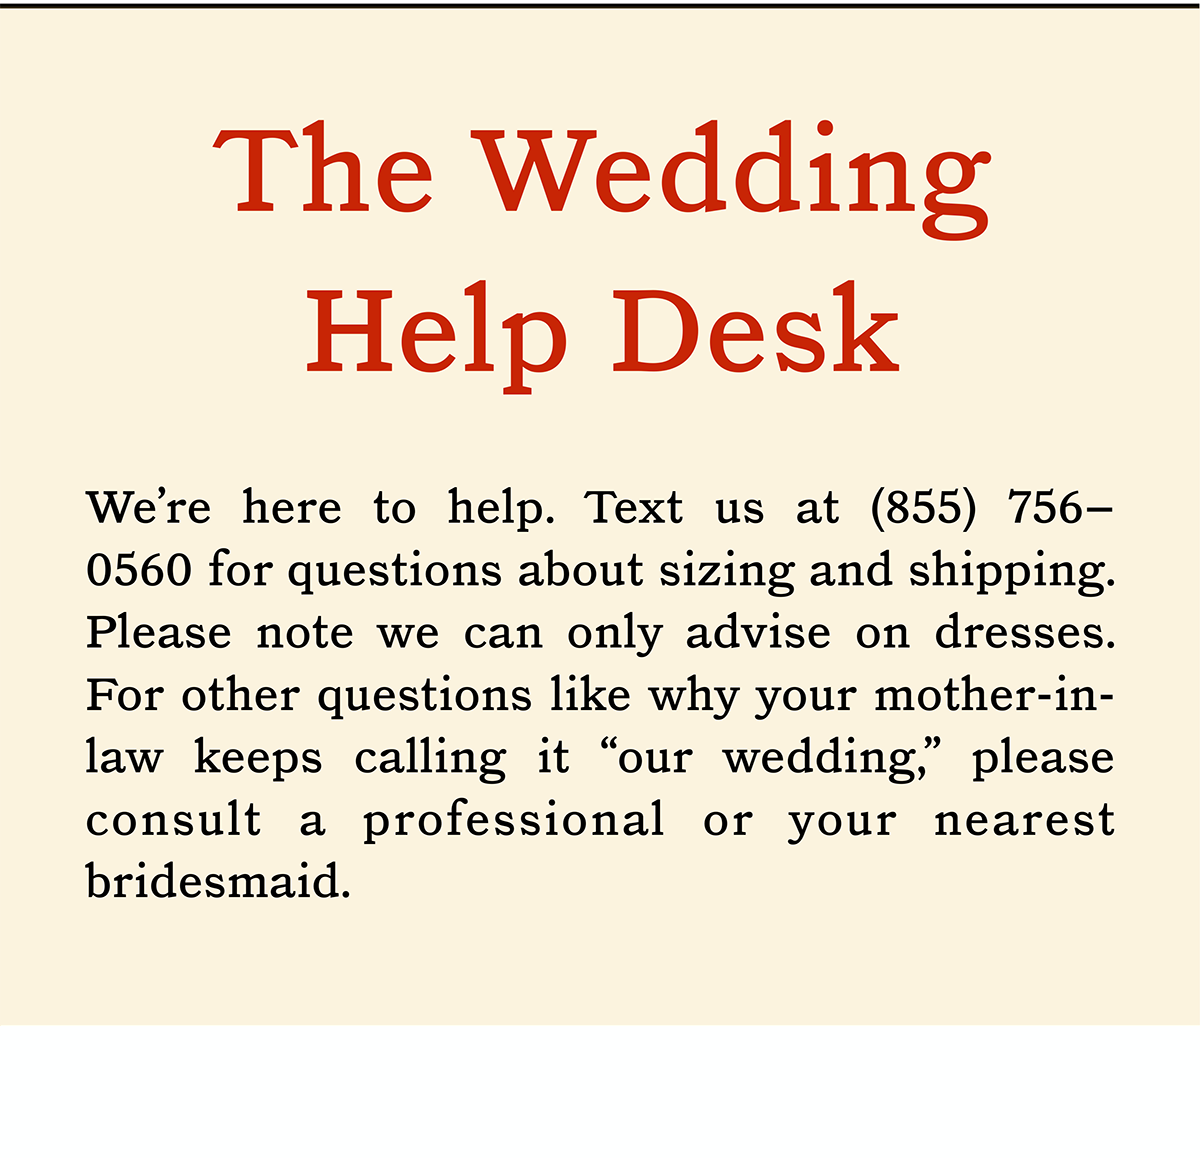 The Wedding Help Desk